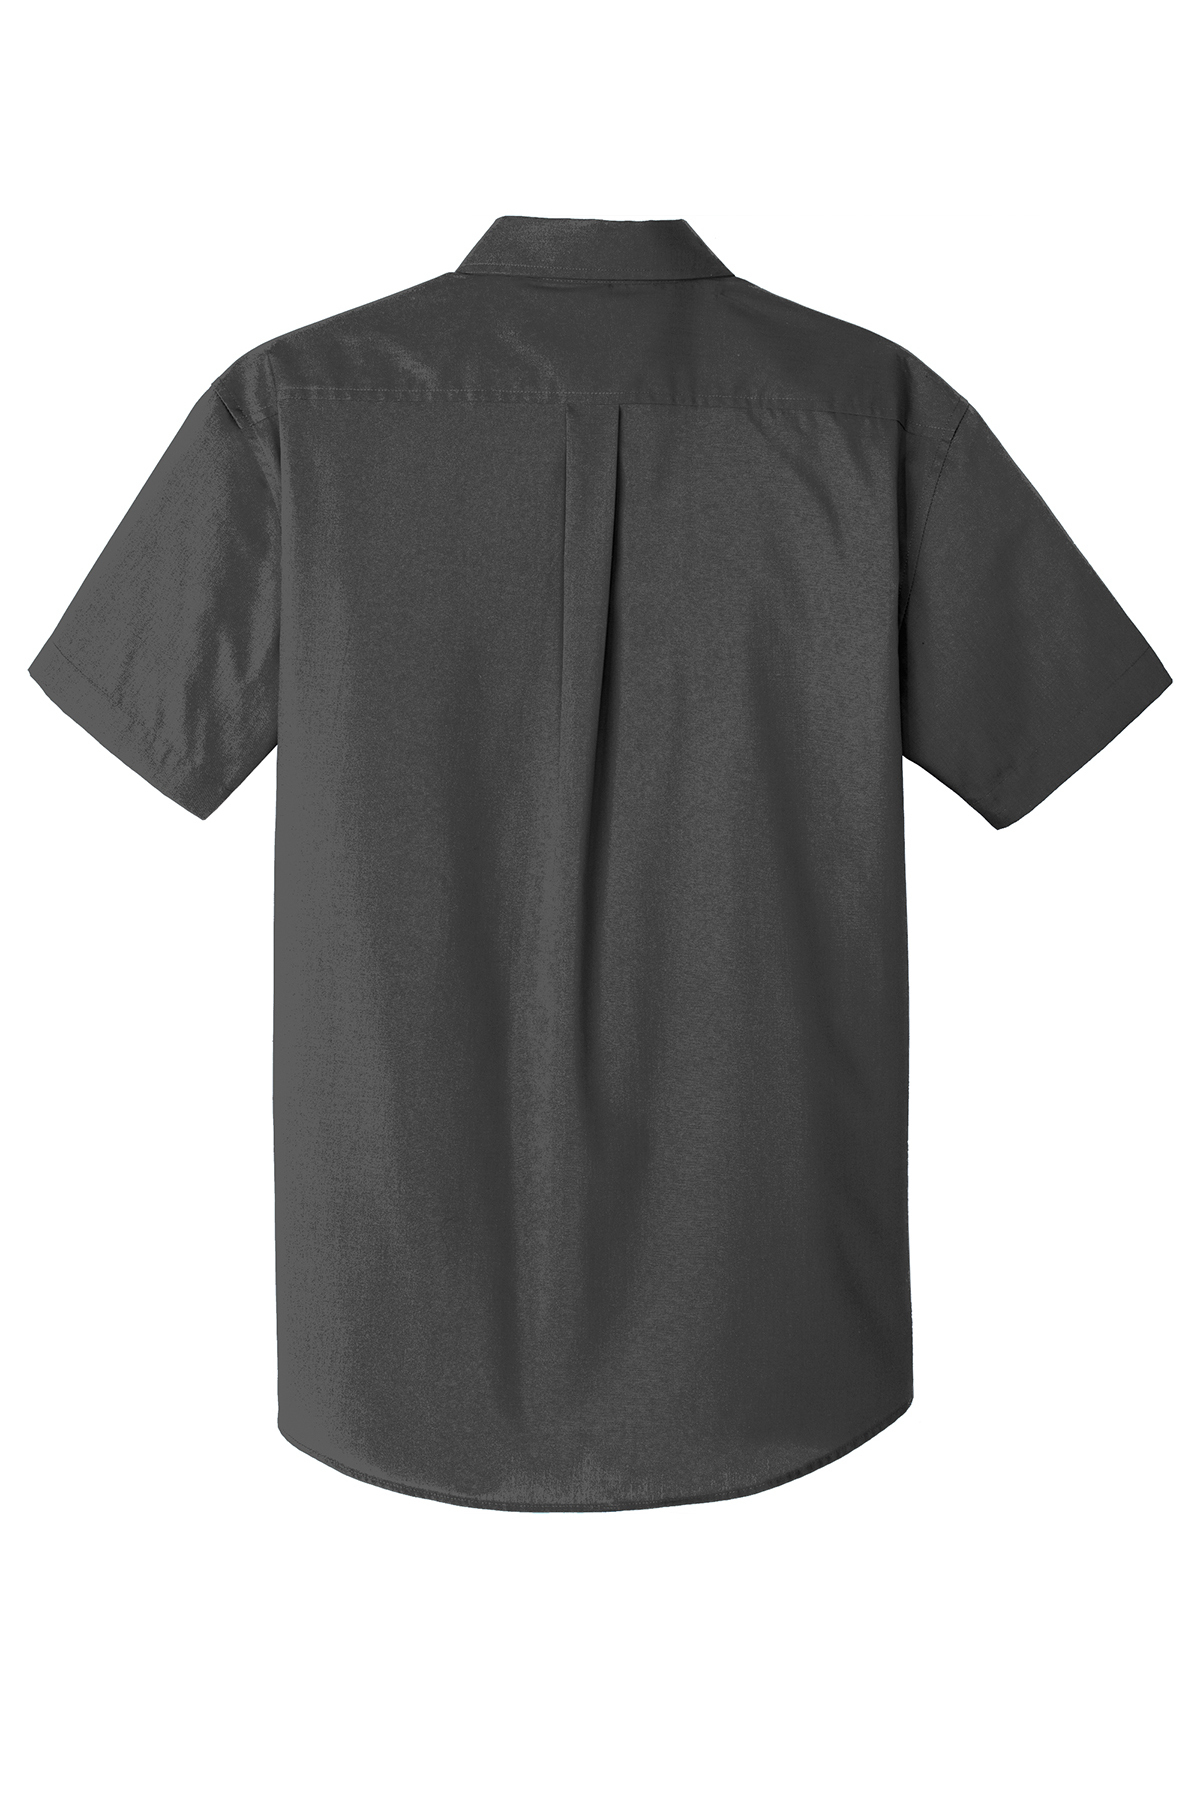 Port Authority Short Sleeve Carefree Poplin Shirt | Product | SanMar